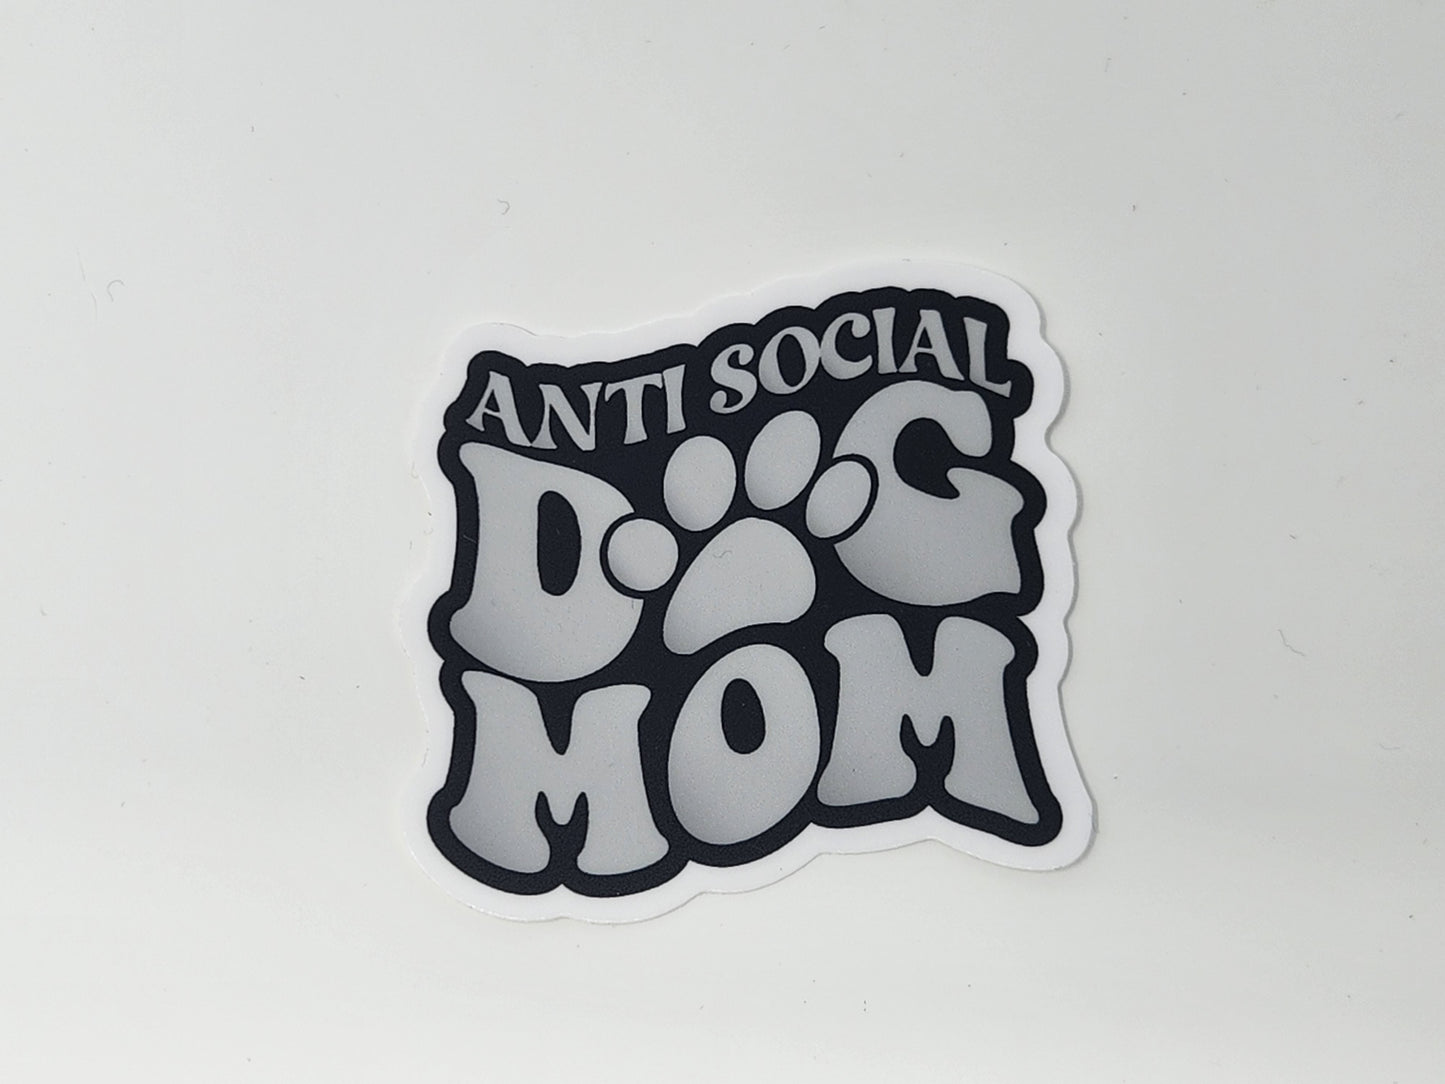 Anti Social Dog Mom Sticker Dog Mom Dog Lover Sticker